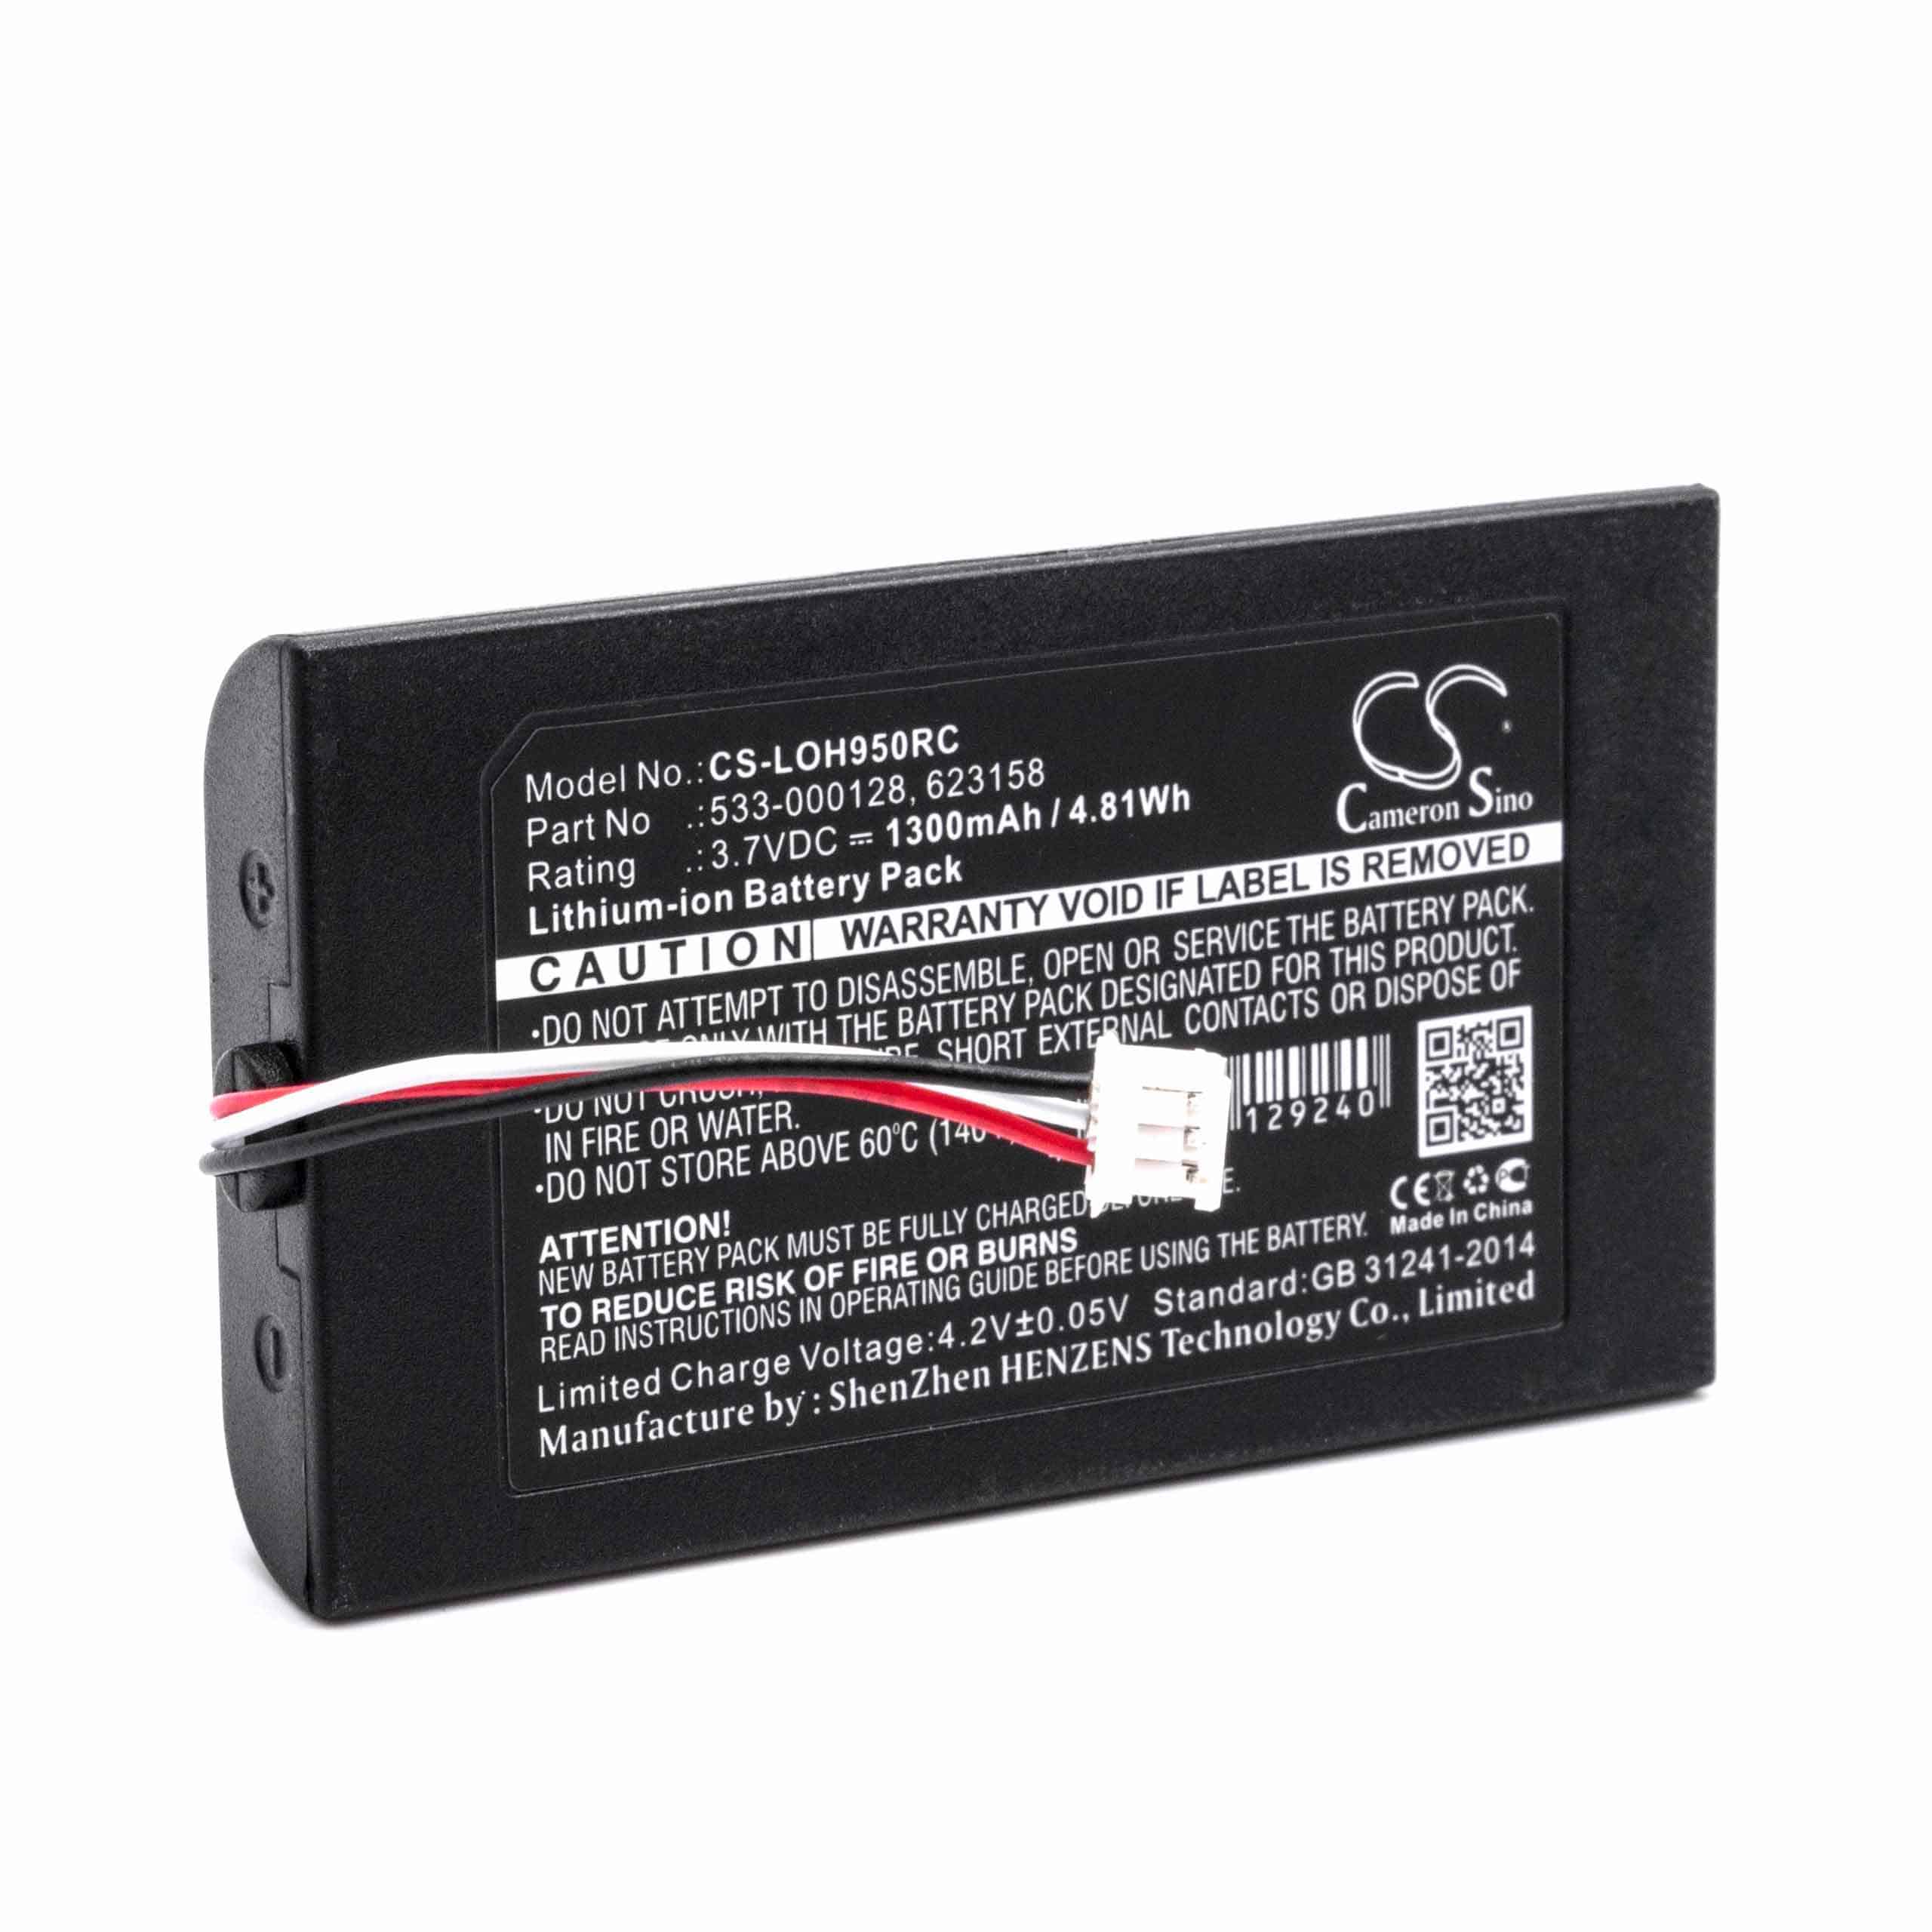 Batería reemplaza Logitech 623158, 533-000128 para mando a distancia Logitech - 1300 mAh 3,7 V Li-Ion